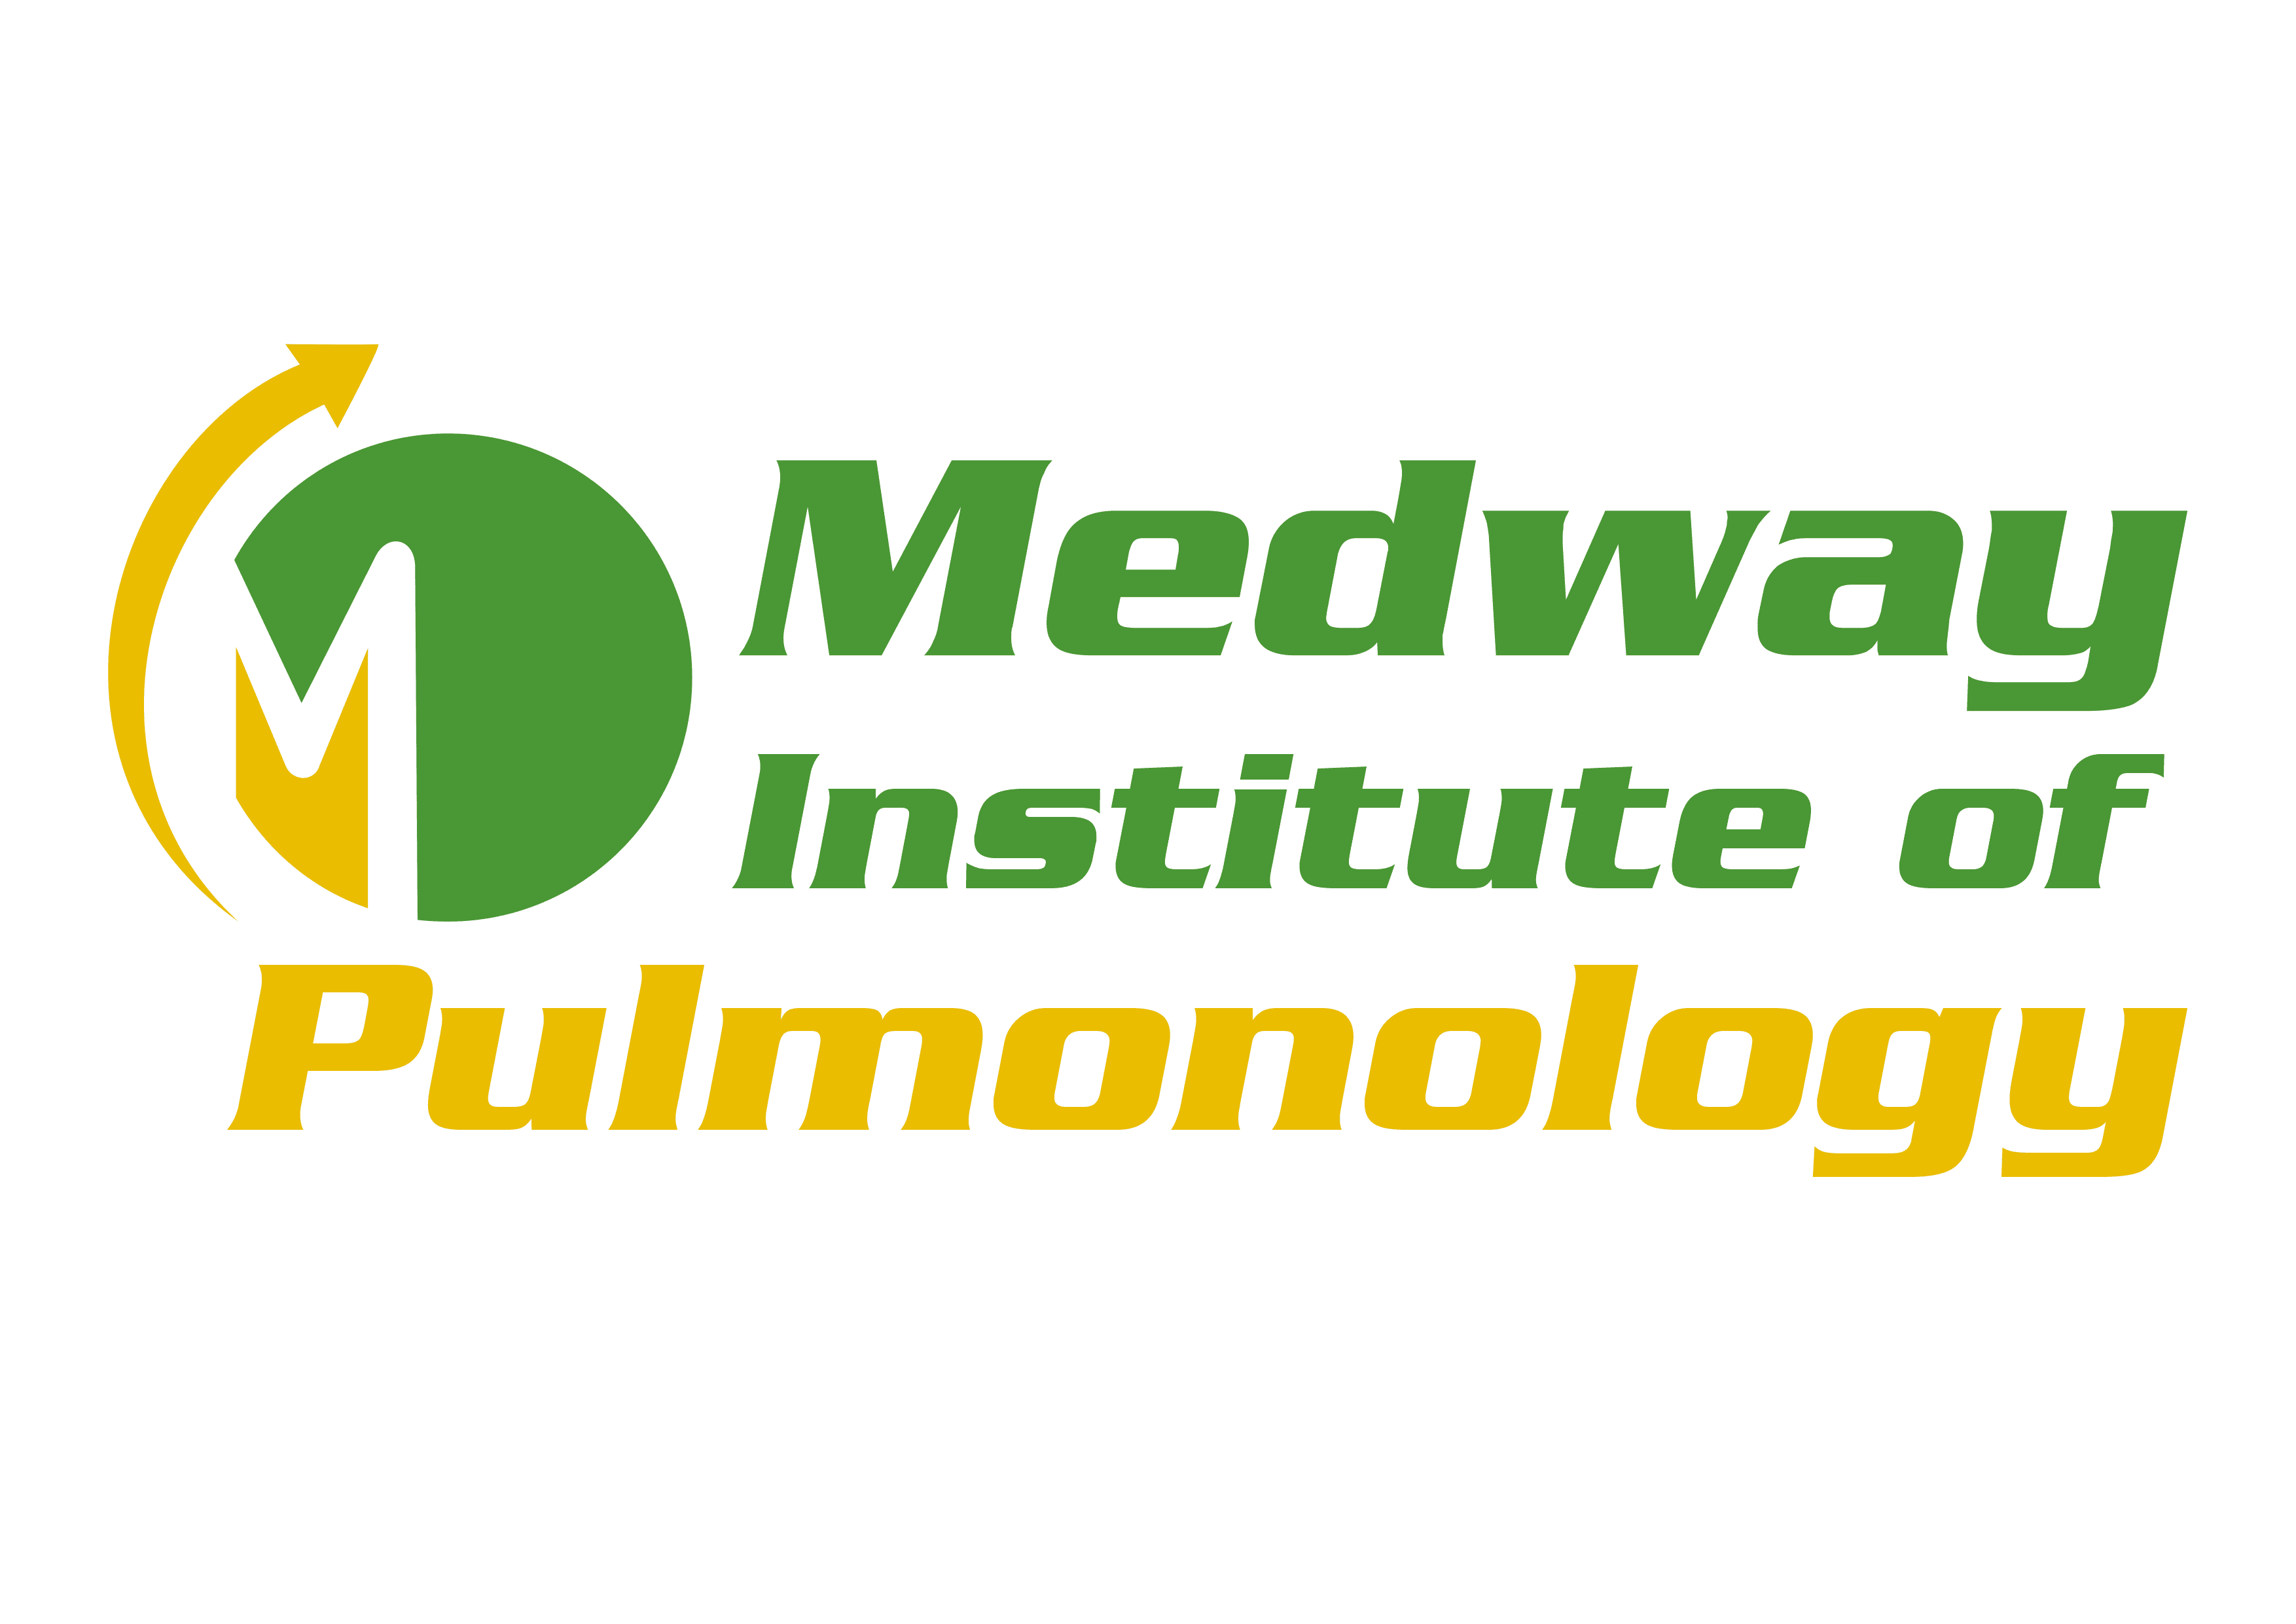 medway pulmonology